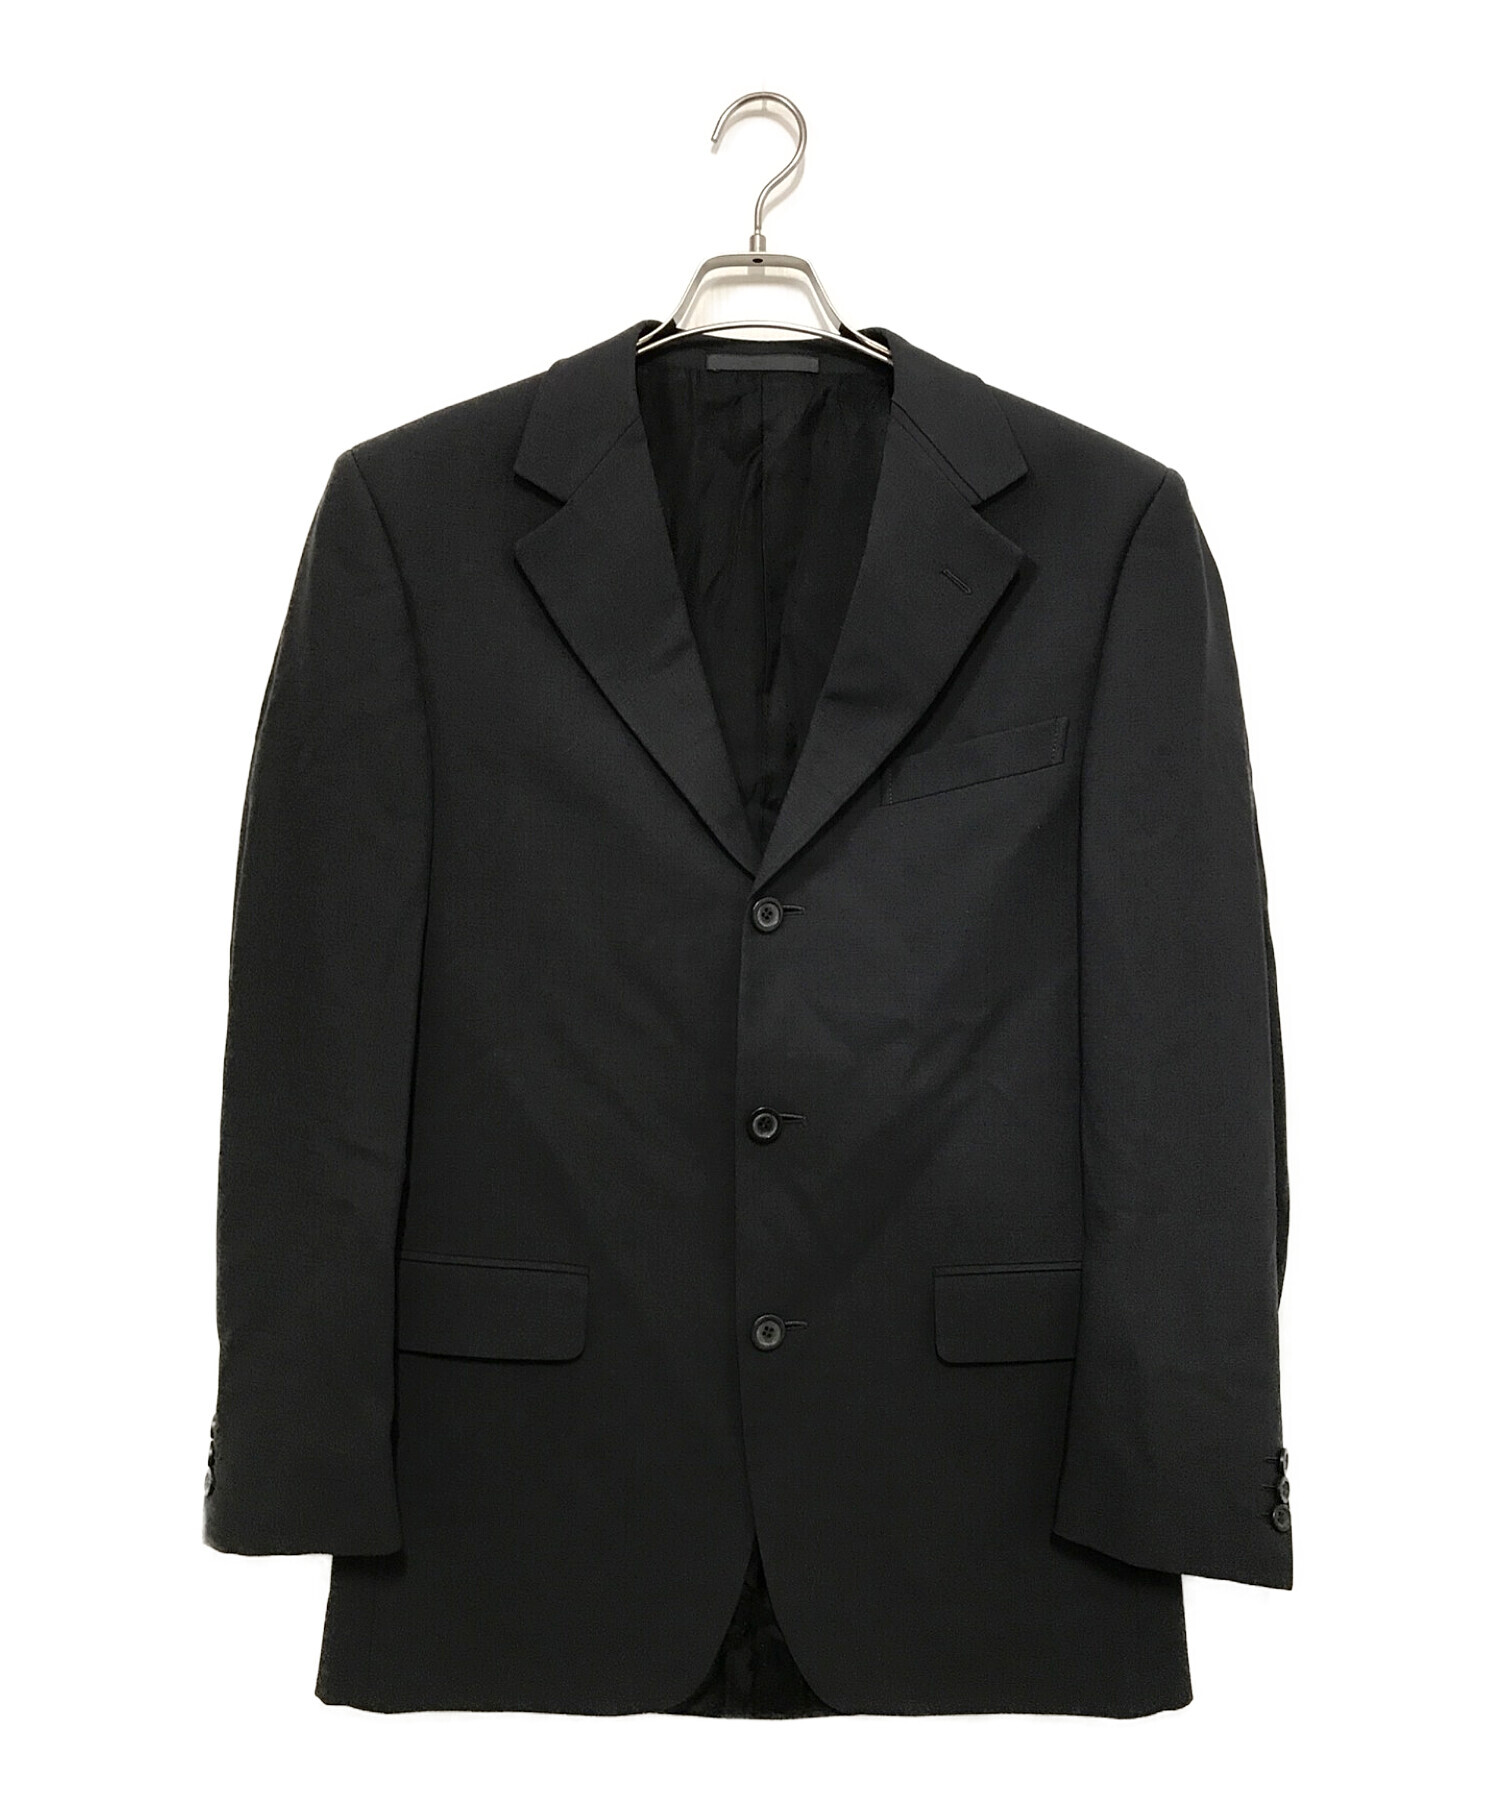 GIANNI VERSACE (ジャンニヴェルサーチ) ヴィンテージセットアップスーツ ブラック サイズ:46